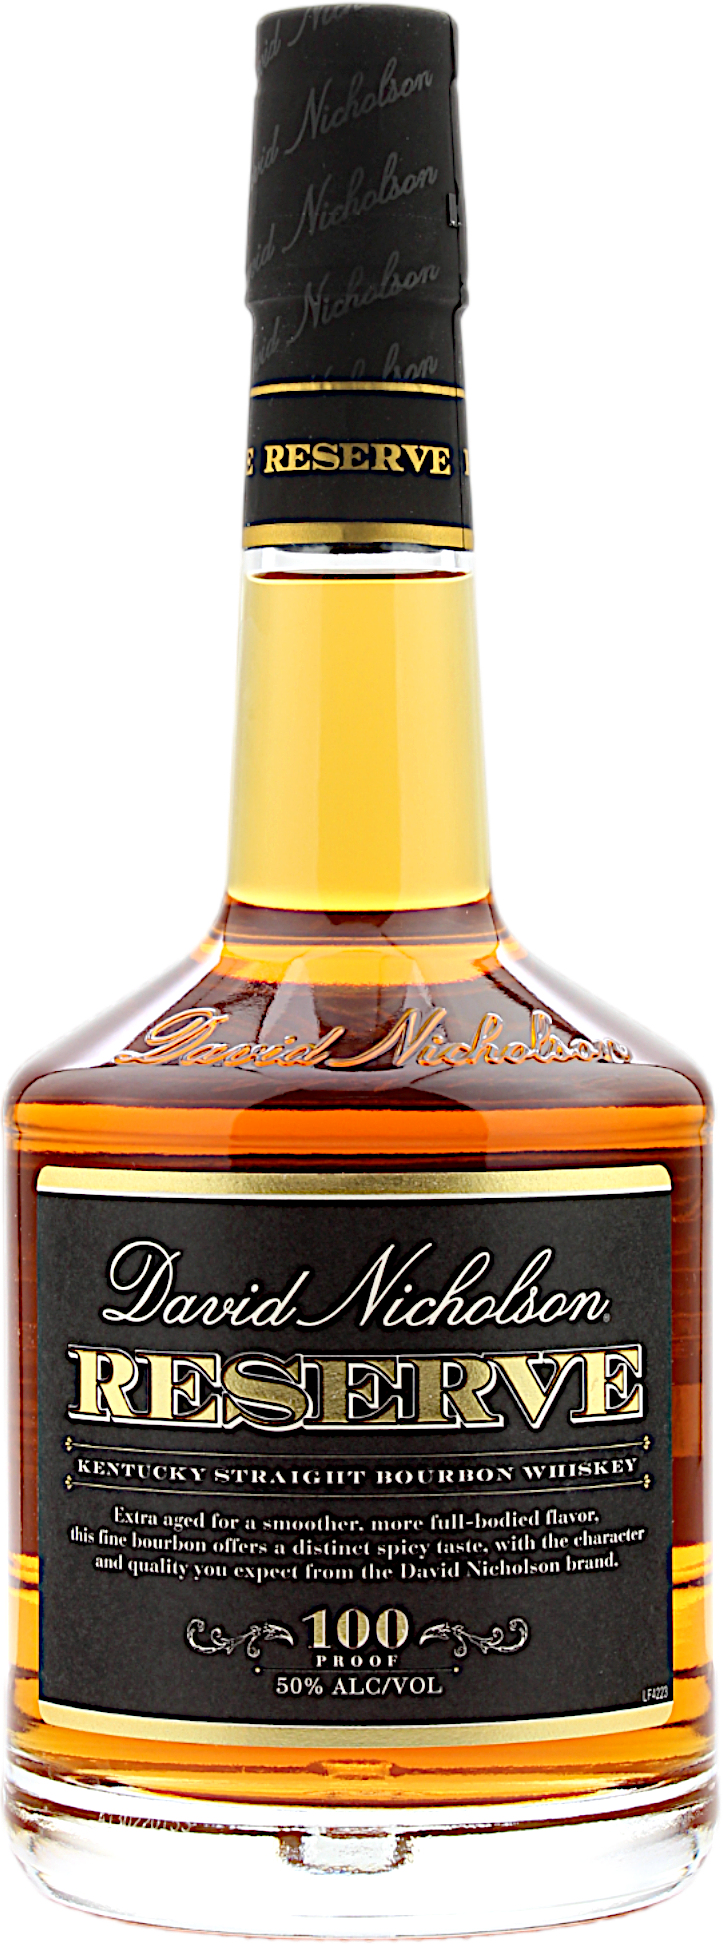 David Nicholson Reserve Bourbon 50.0% 0,7l